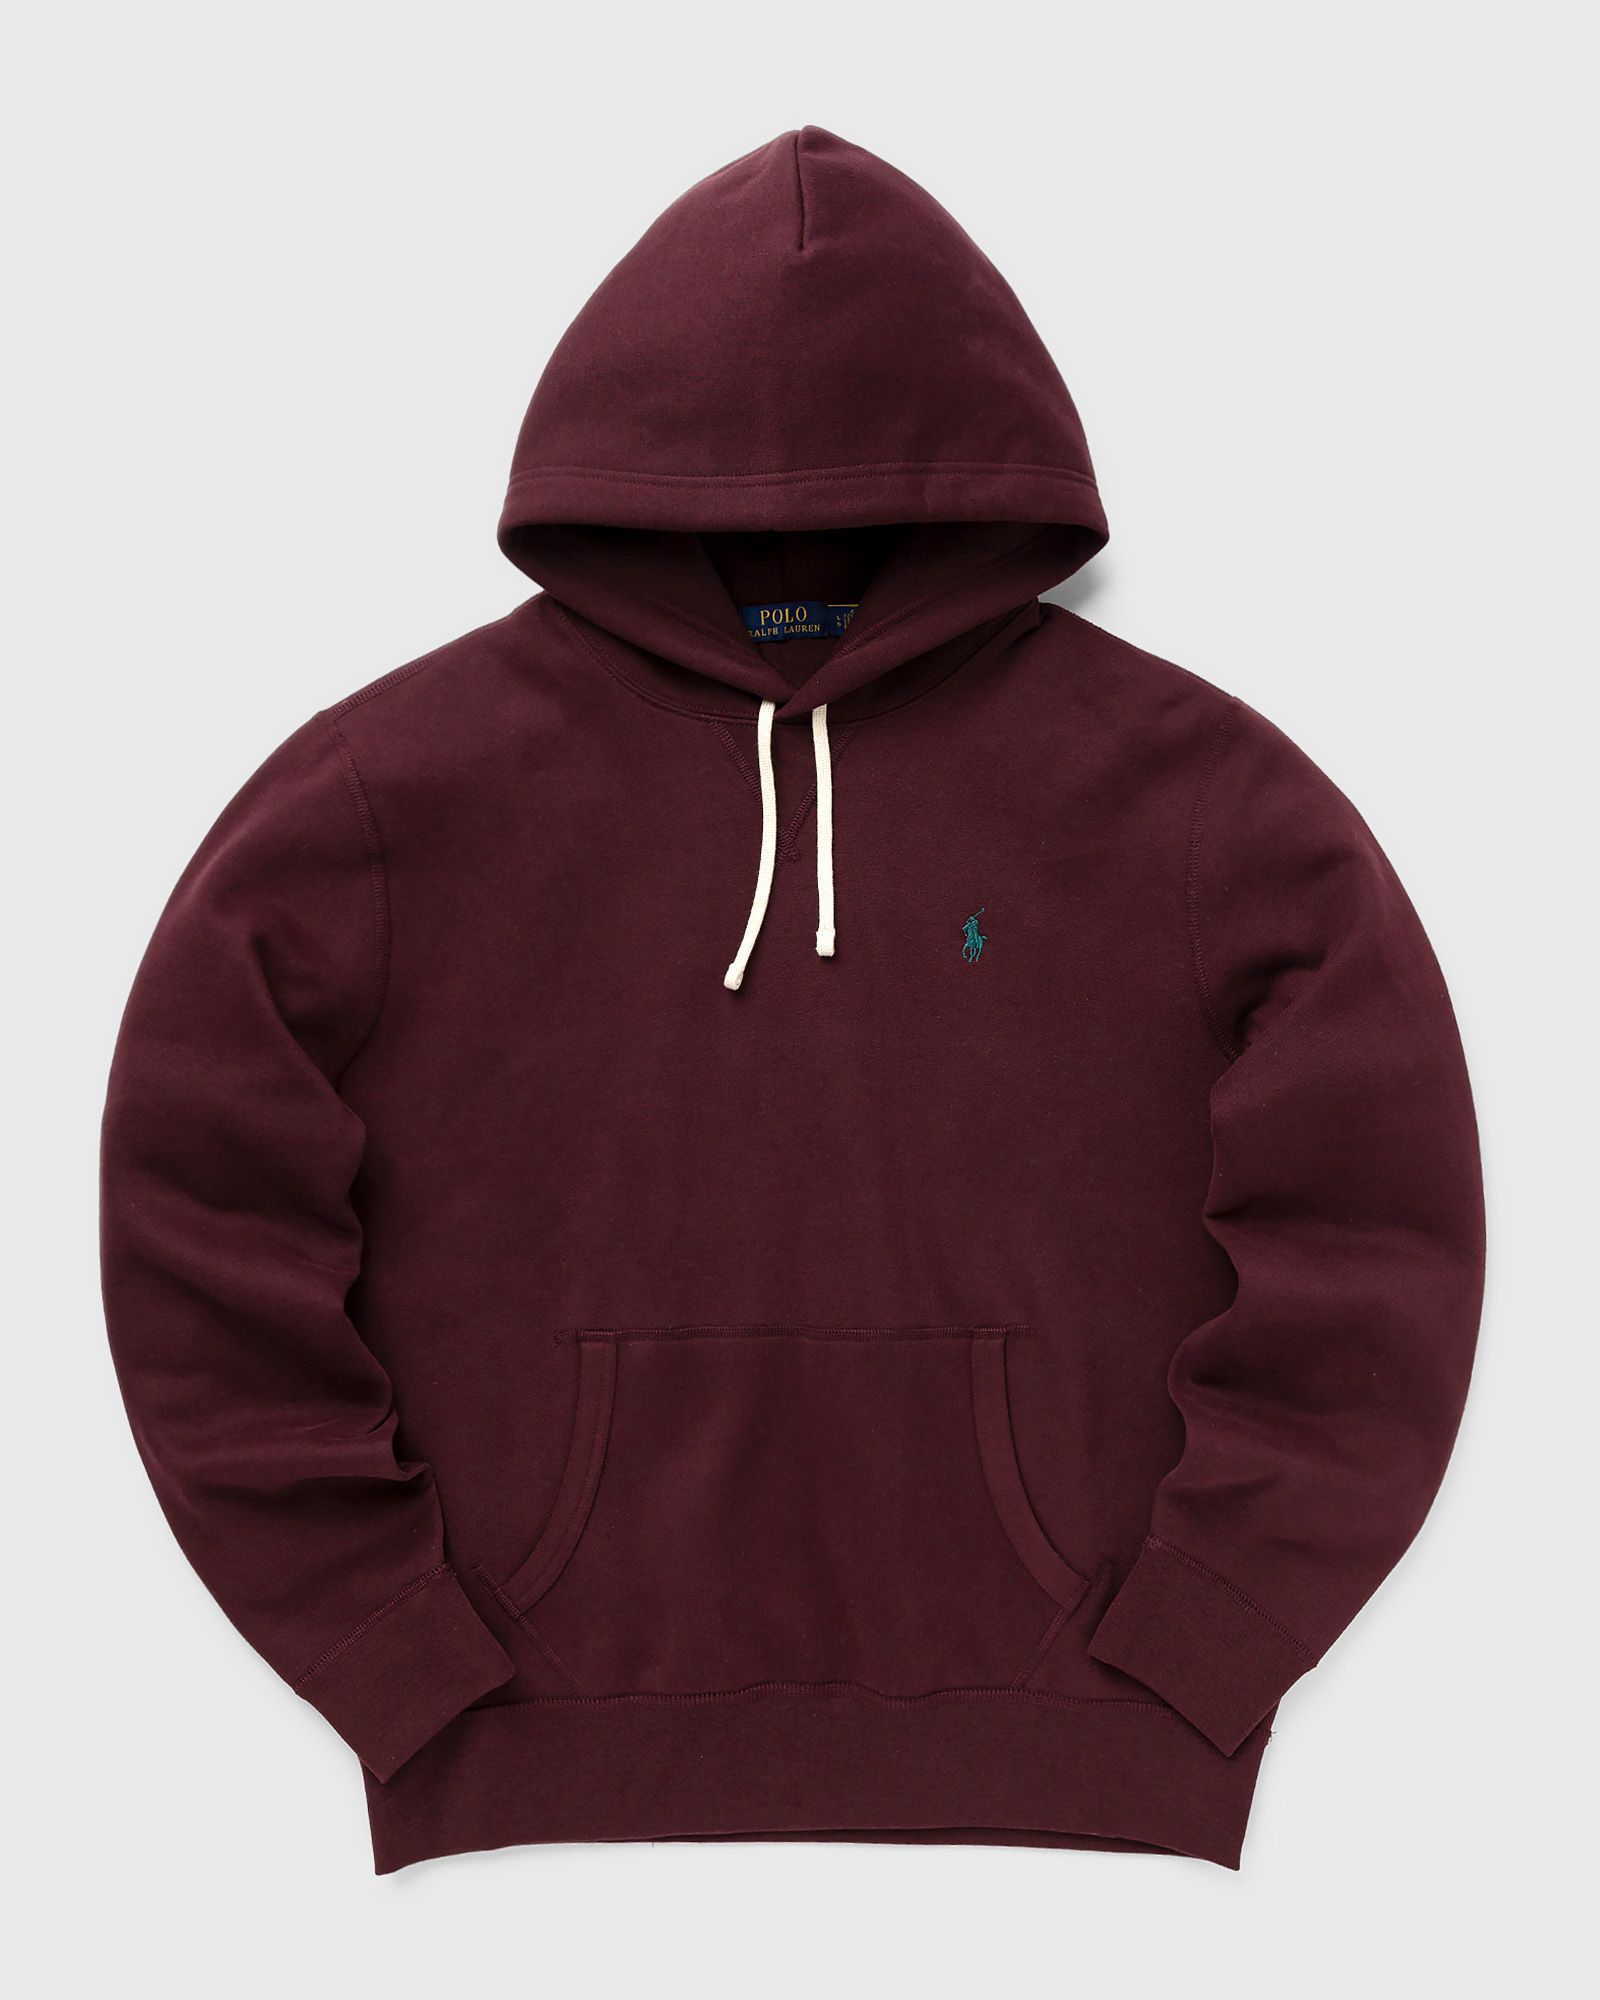 Polo Ralph Lauren - lspohood m2-long sleeve-knit men hoodies red in größe:s